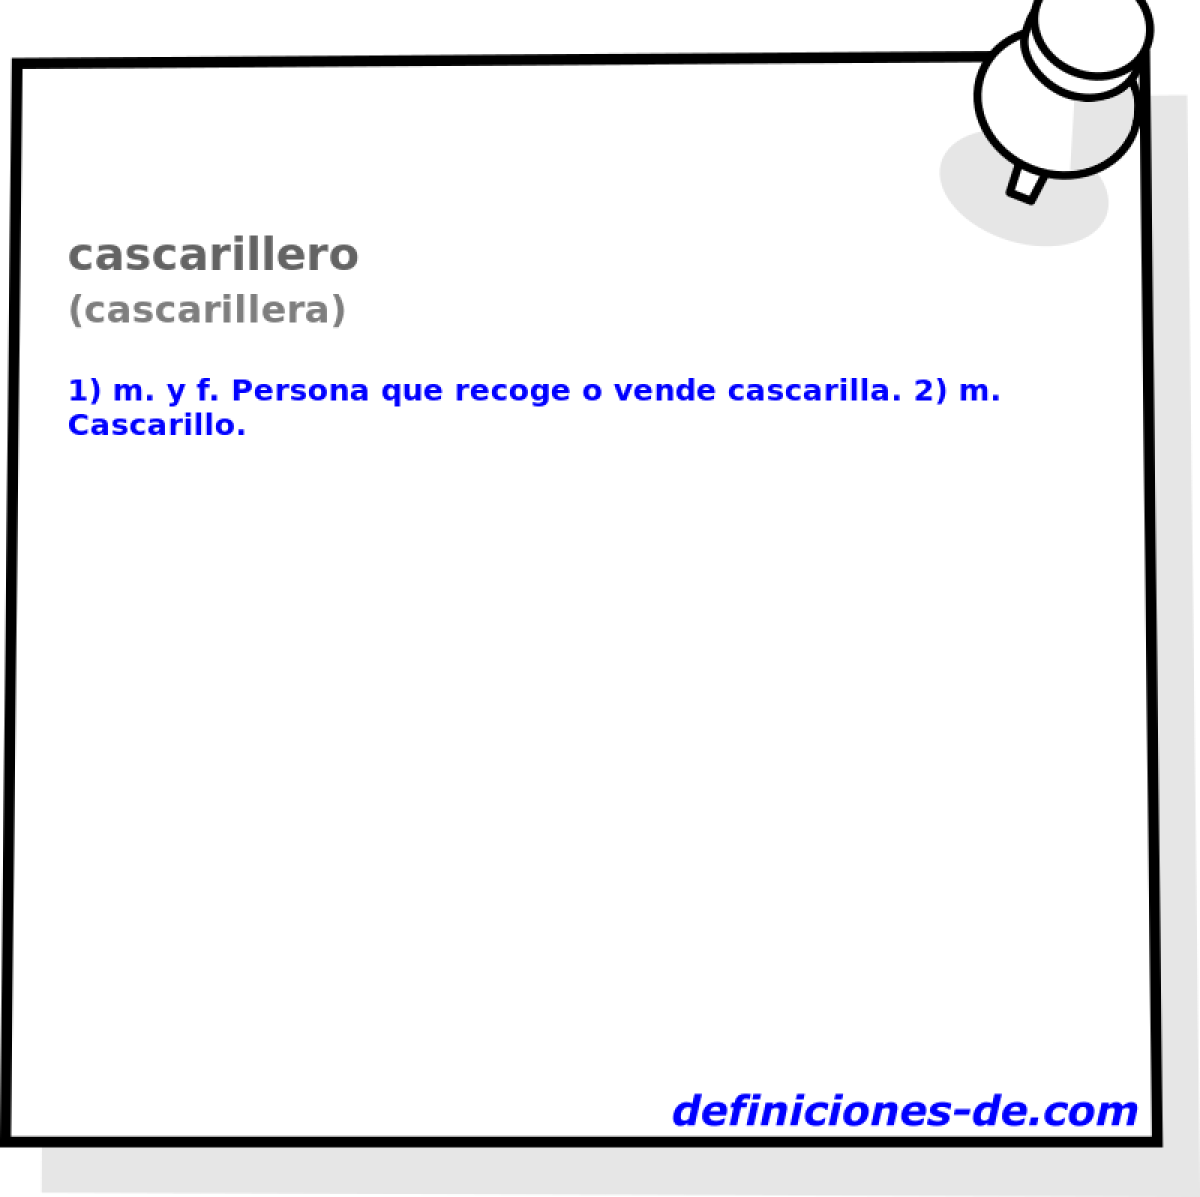 cascarillero (cascarillera)